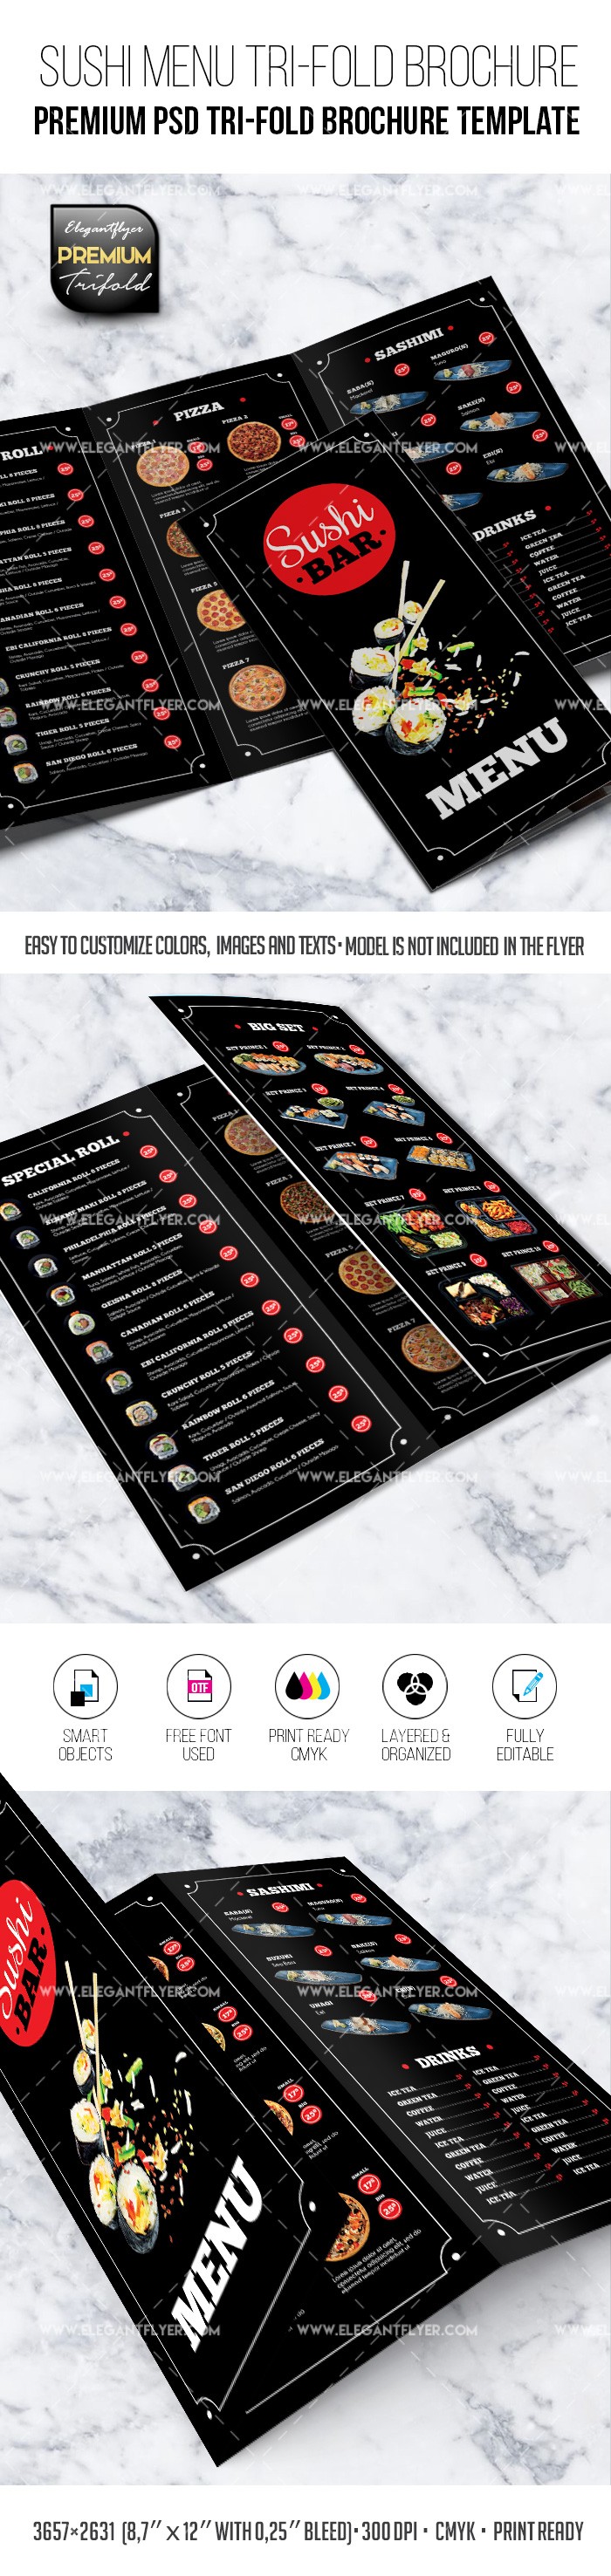 Sushi Restaurant Menu - Premium PSD Tri-Fold Brochure Template by ElegantFlyer